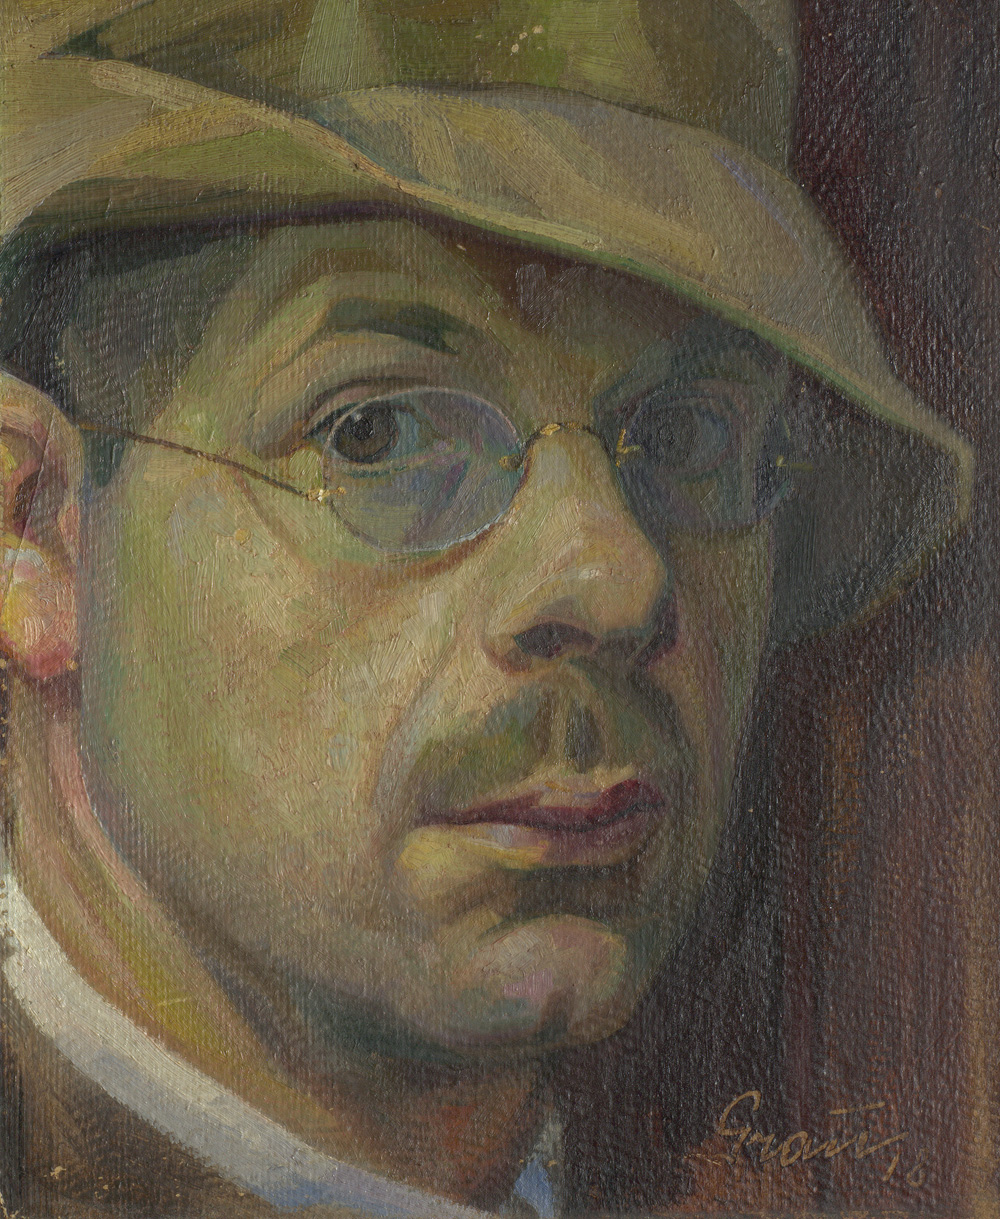 Albin Grau self portrait (1918) courtesy of Kantonsbibliothek Appenzell Ausserrhoden